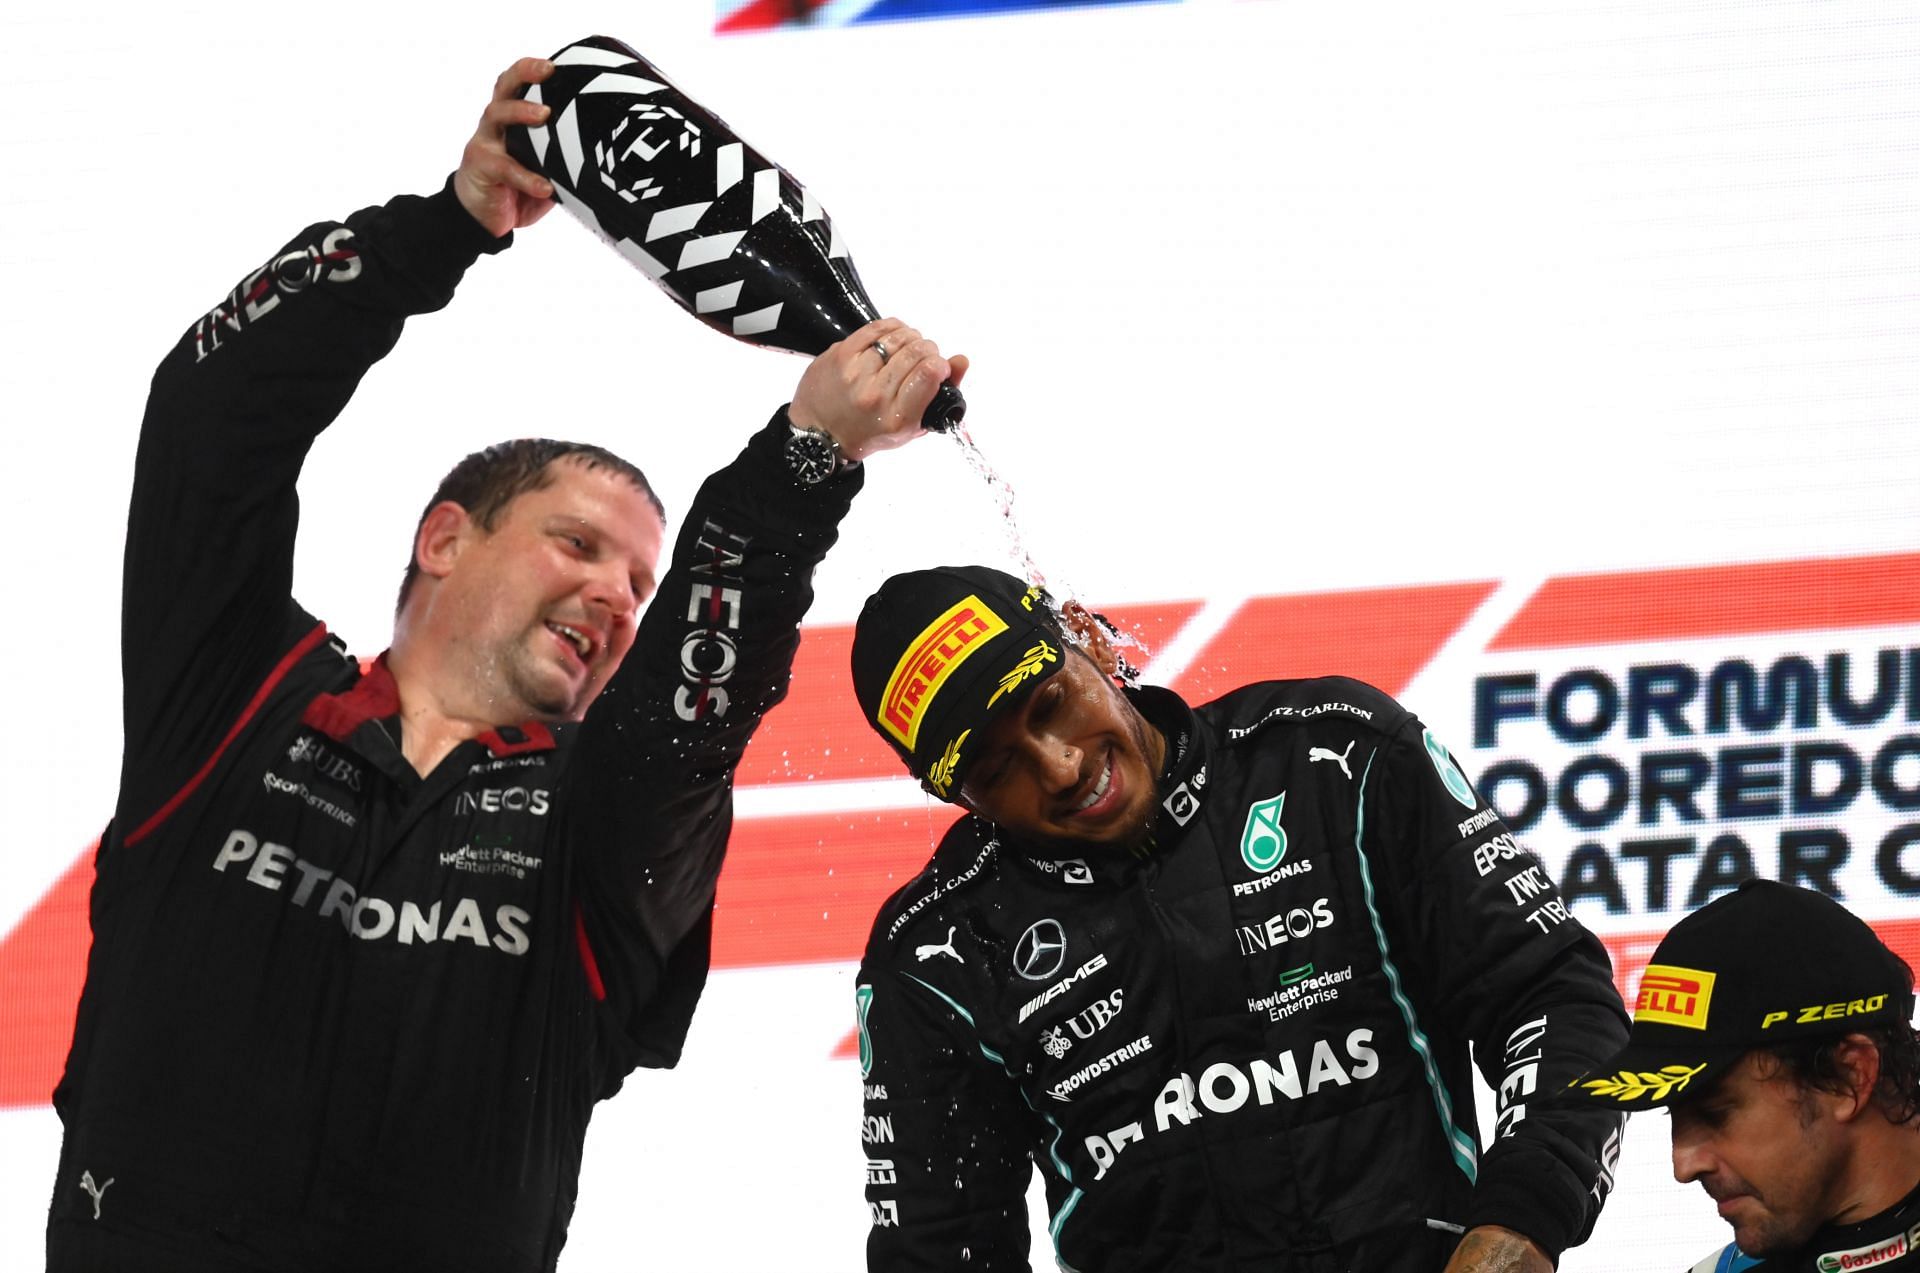 Lewis Hamilton celebrates on the podium of the Qatar Grand Prix (Photo by Clive Mason/Getty Images)